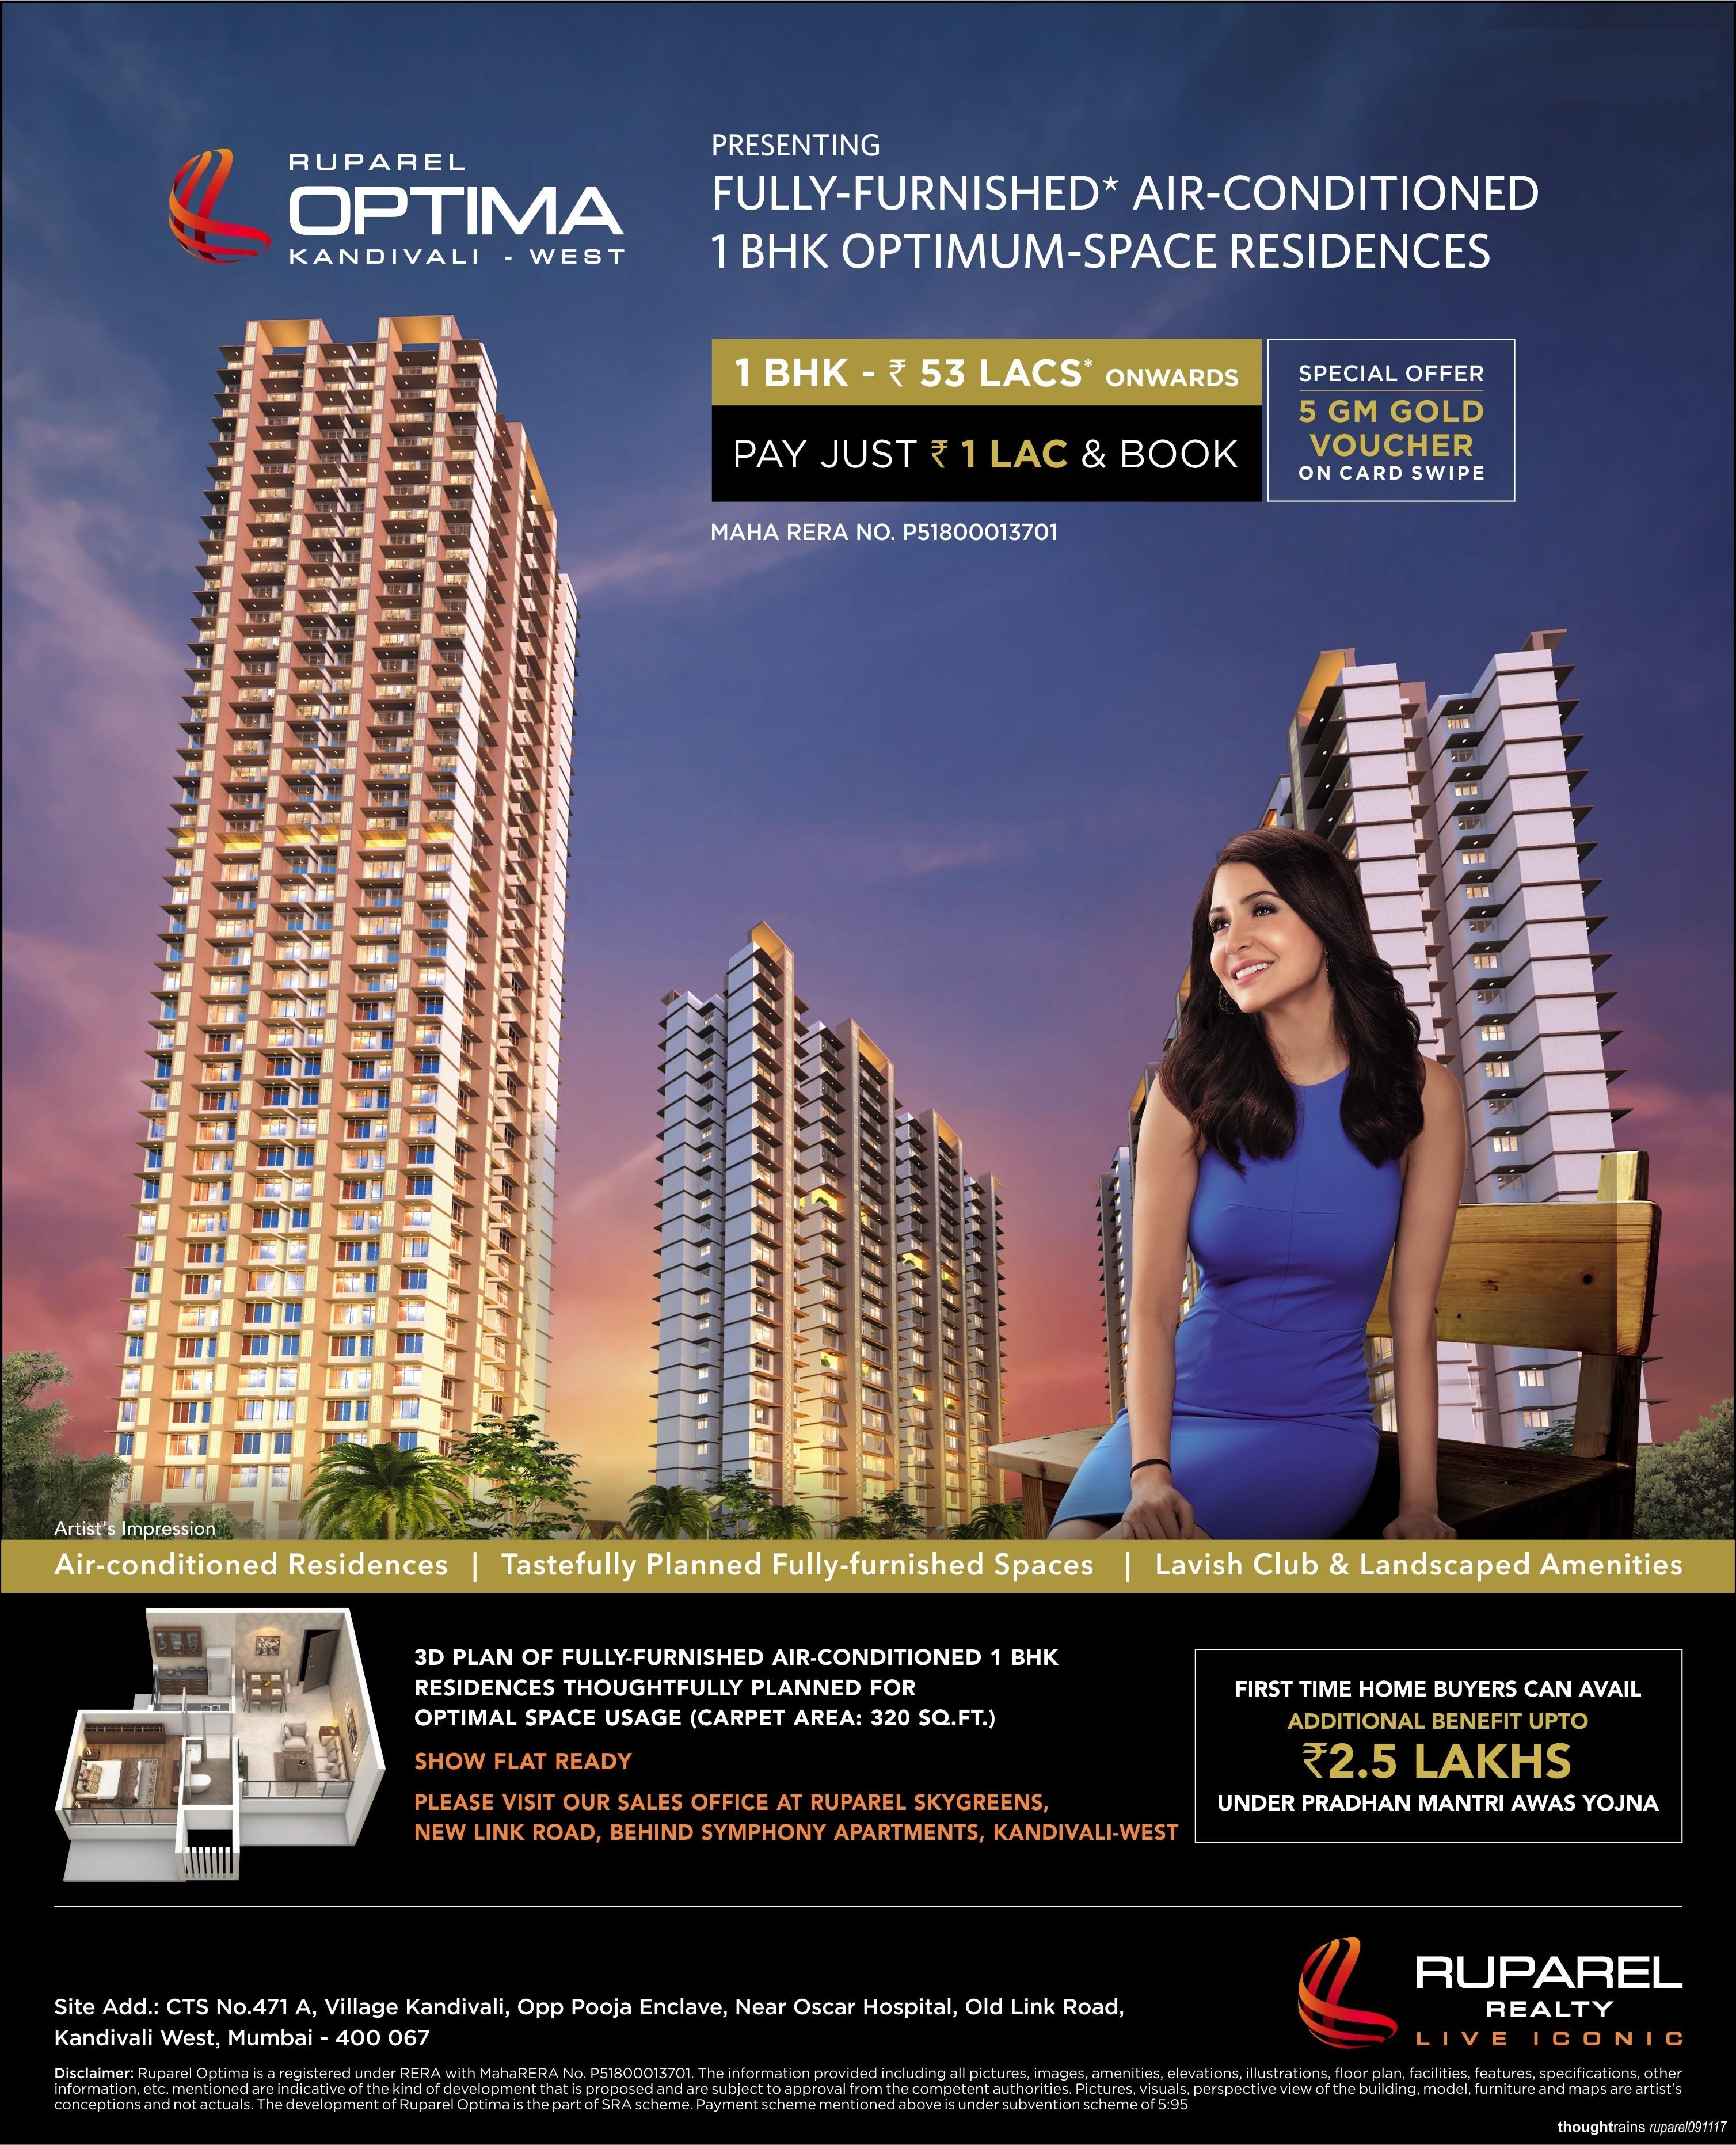 Presenting fully furnished, air-conditioned 1 BHK optimum space residences at Ruparel Optima in Mumbai